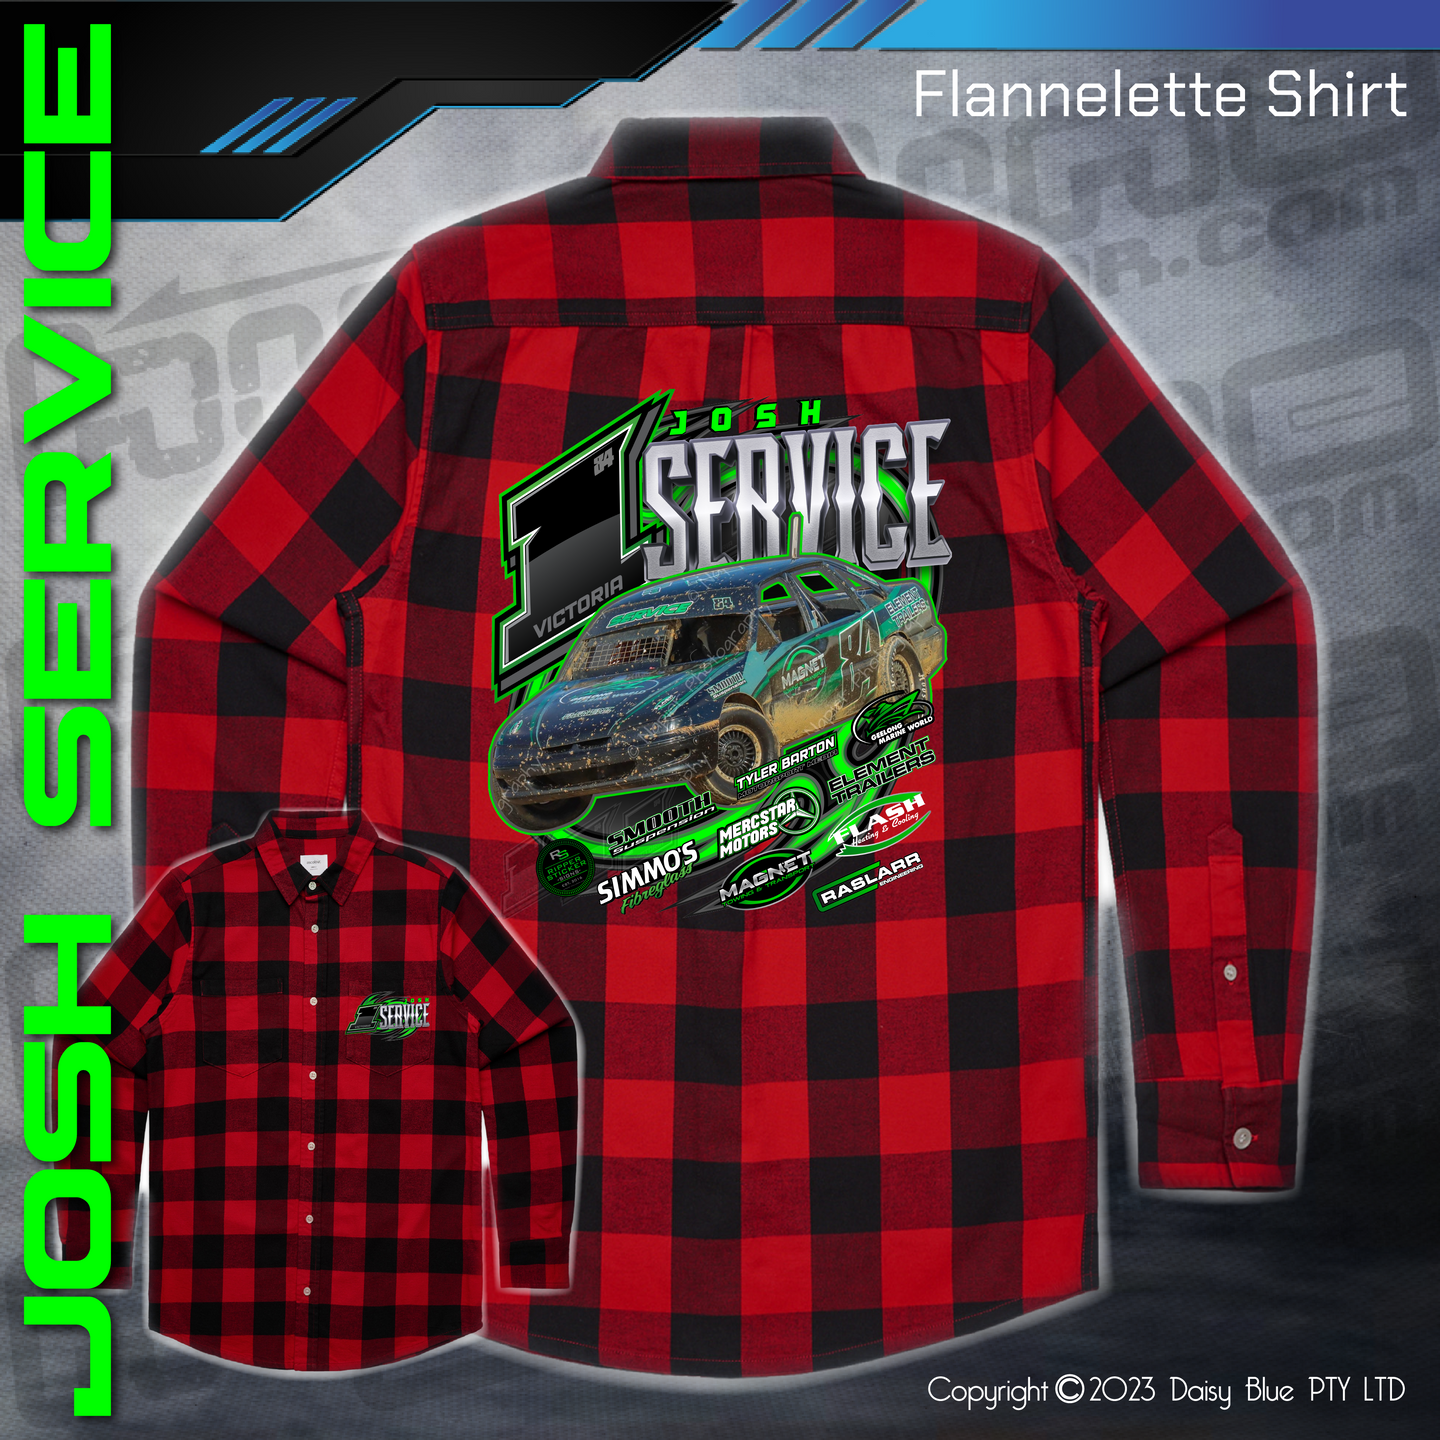 Flannelette Shirt - Josh Service